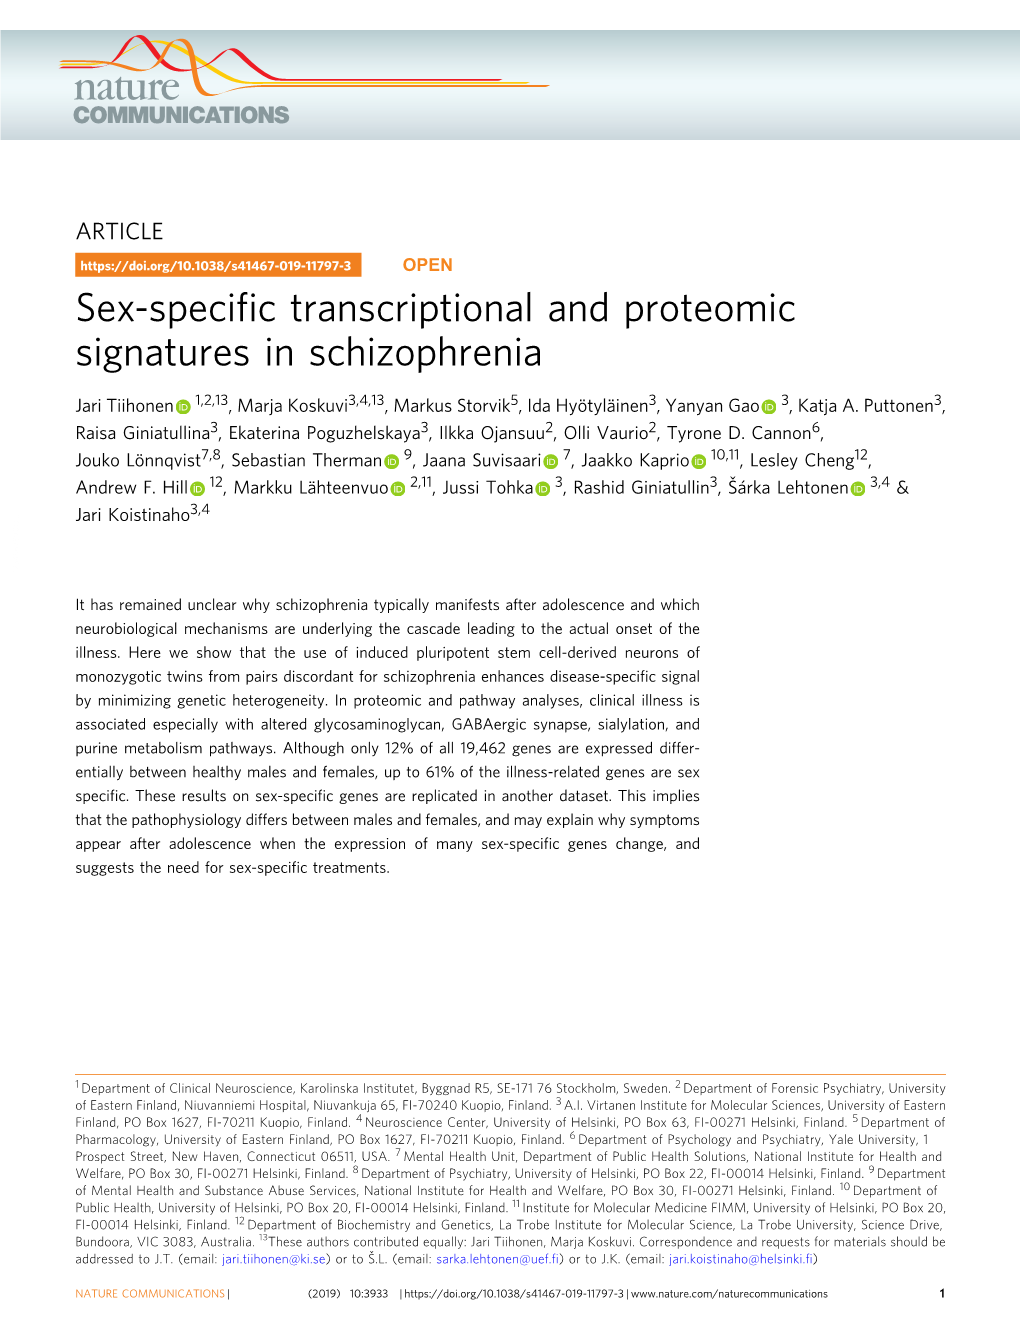 Sex-Specific Transcriptional and Proteomic Signatures in Schizophrenia